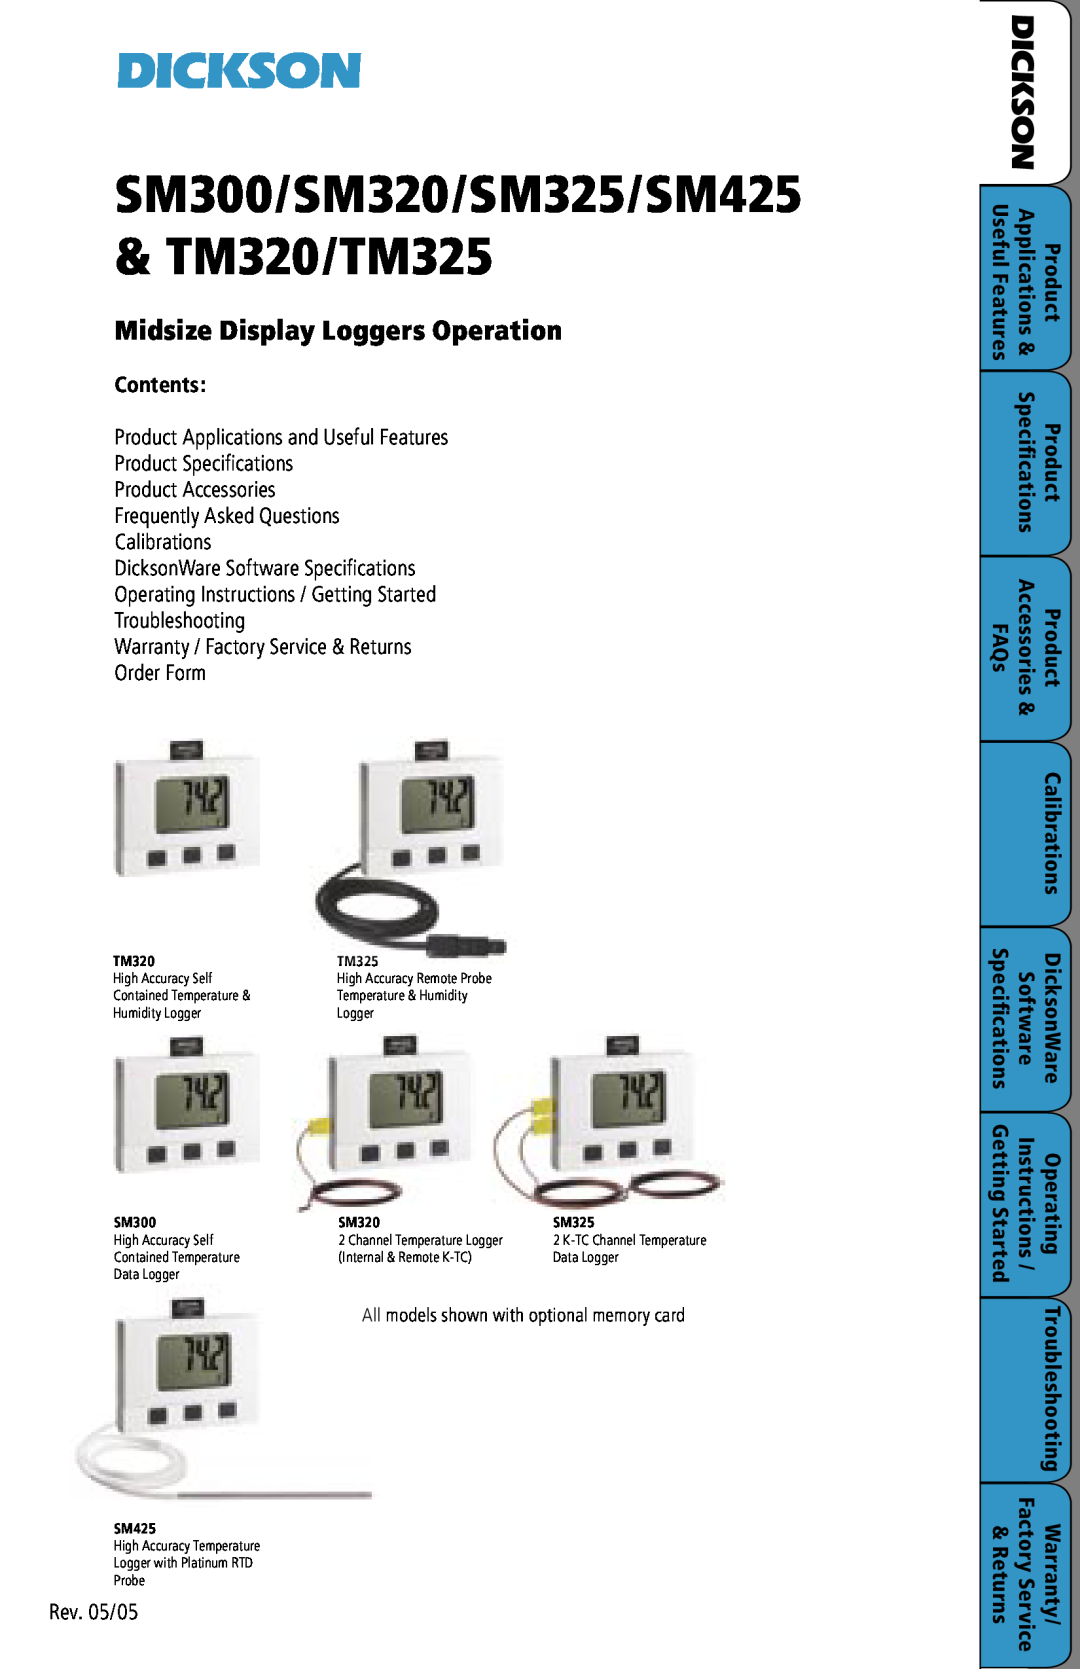 Dickson Industrial manual Dickson, SM300/SM320/SM325/SM425 & TM320/TM325, Midsize Display Loggers Operation 